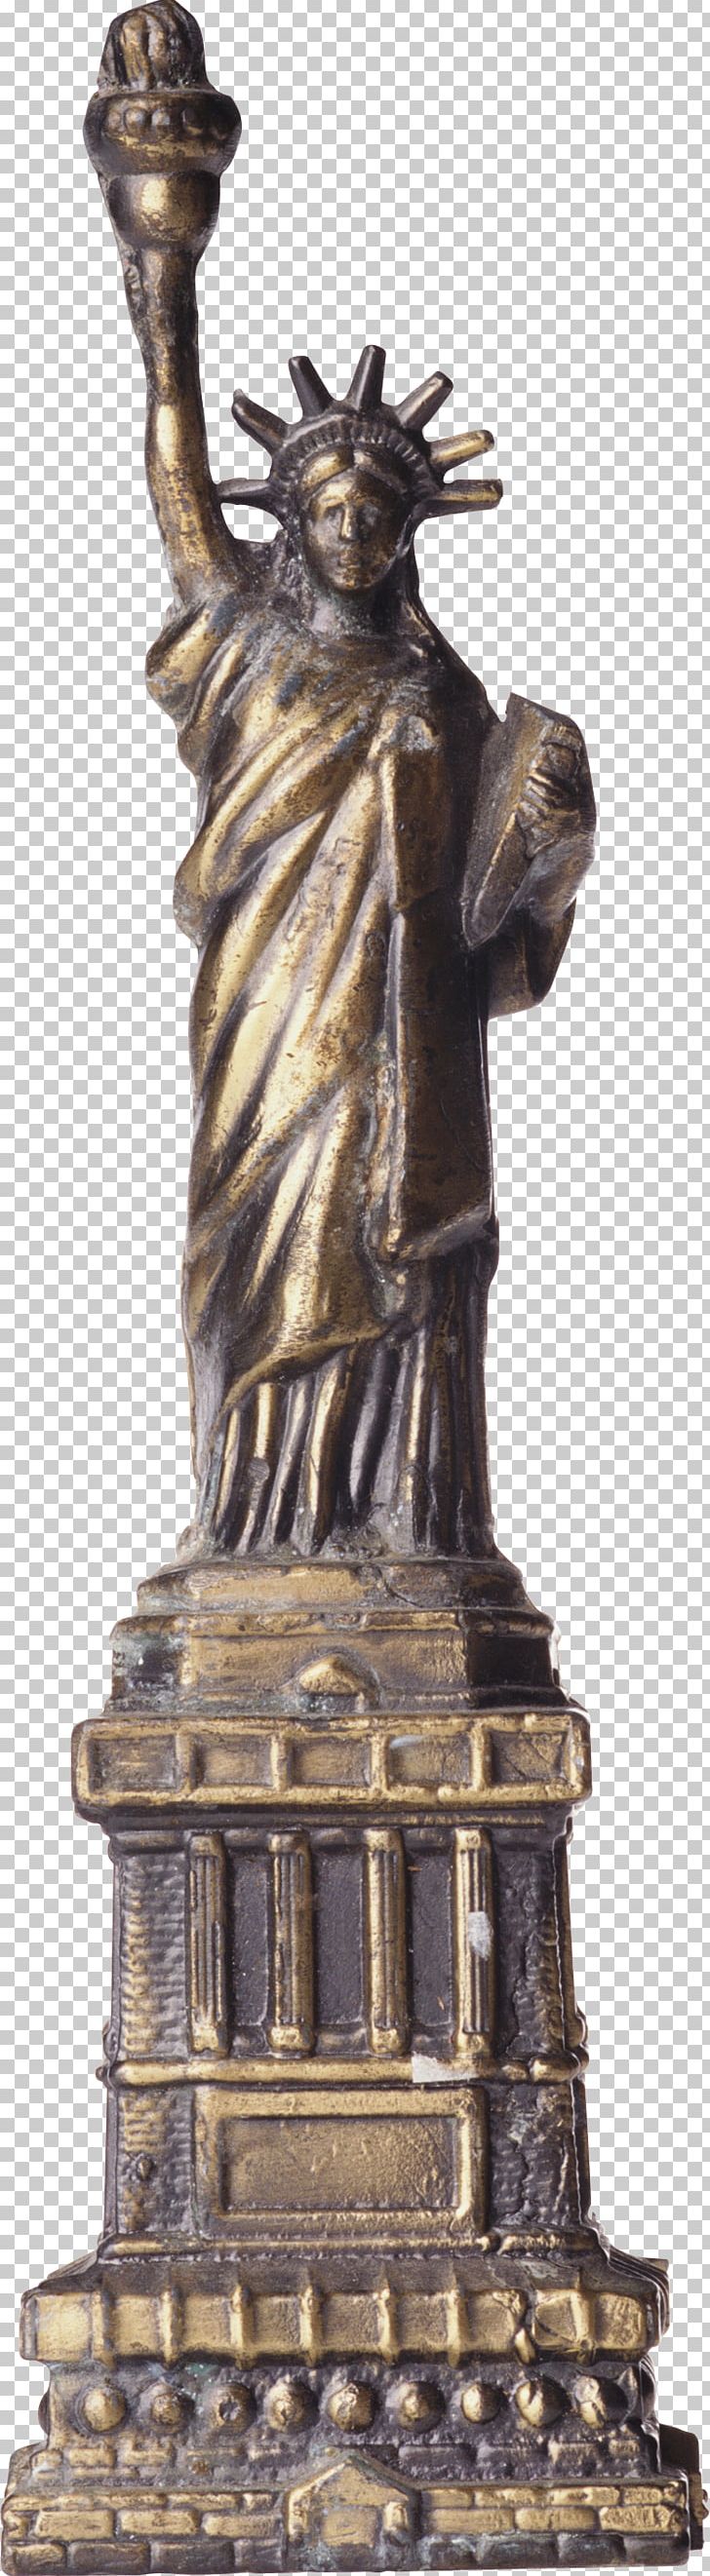 Statue Of Liberty Bronze Sculpture Figurine PNG, Clipart, Ancient History, Antique, Brass, Bronze, Bronze Sculpture Free PNG Download